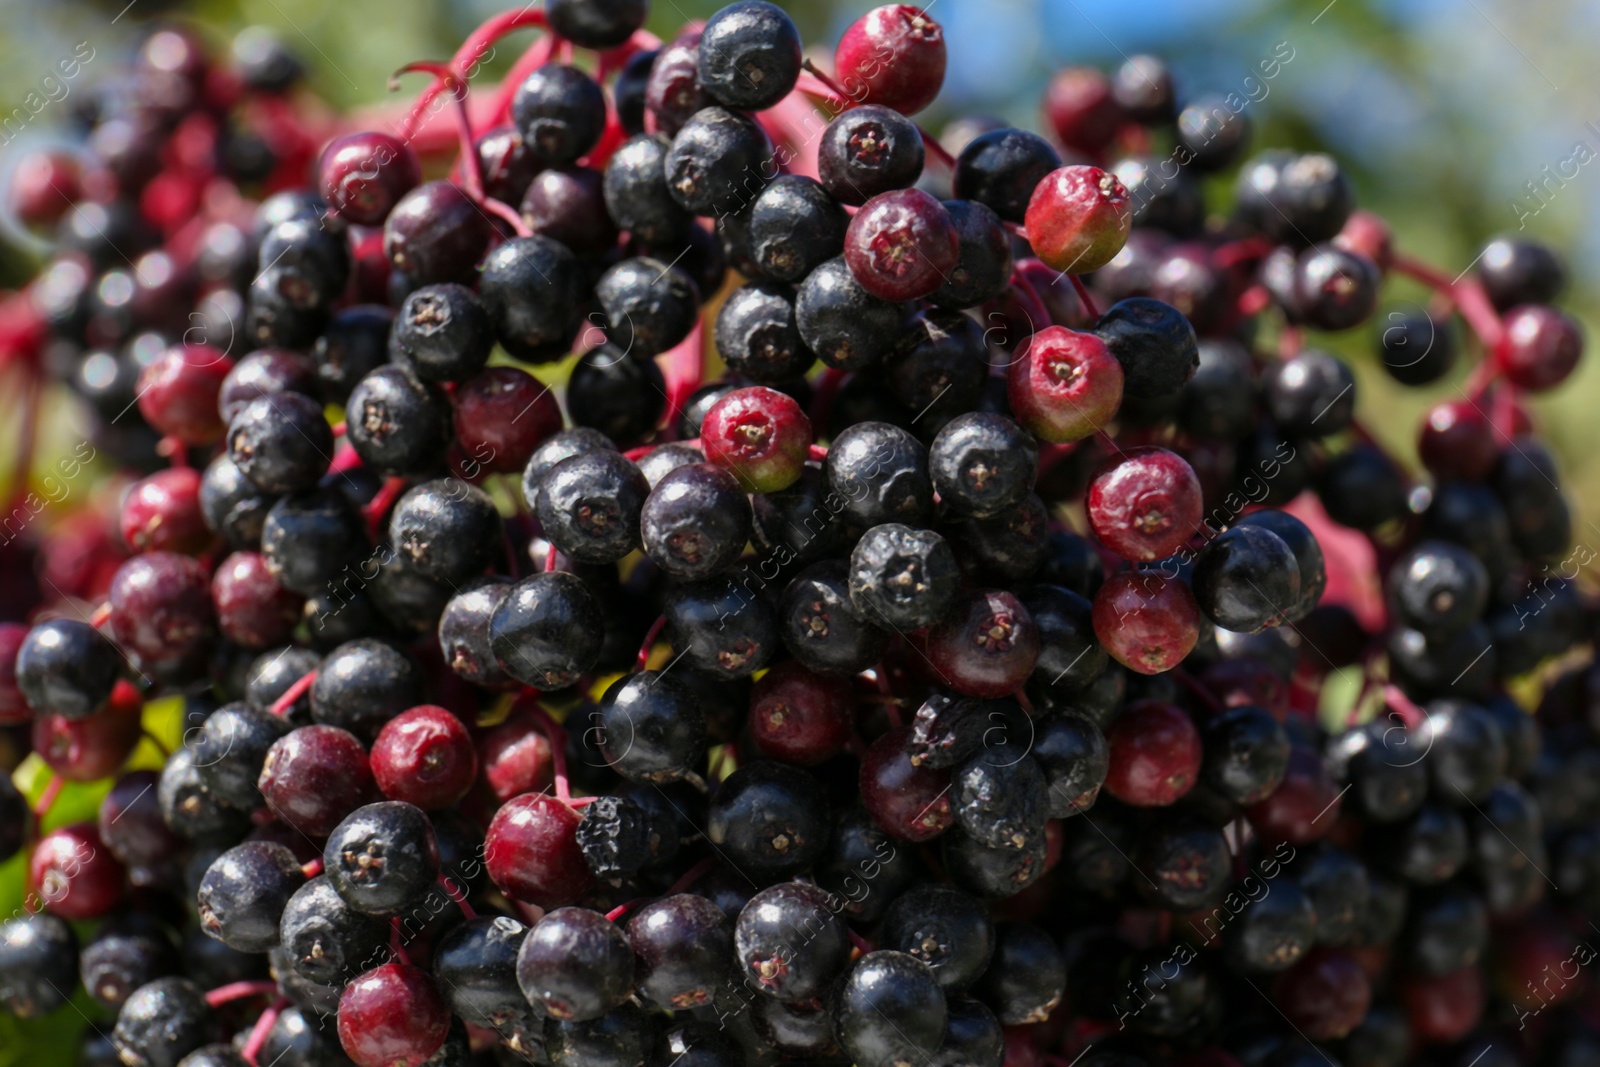 Photo of Tasty elderberries (Sambucus) growing on blurred background, closeup